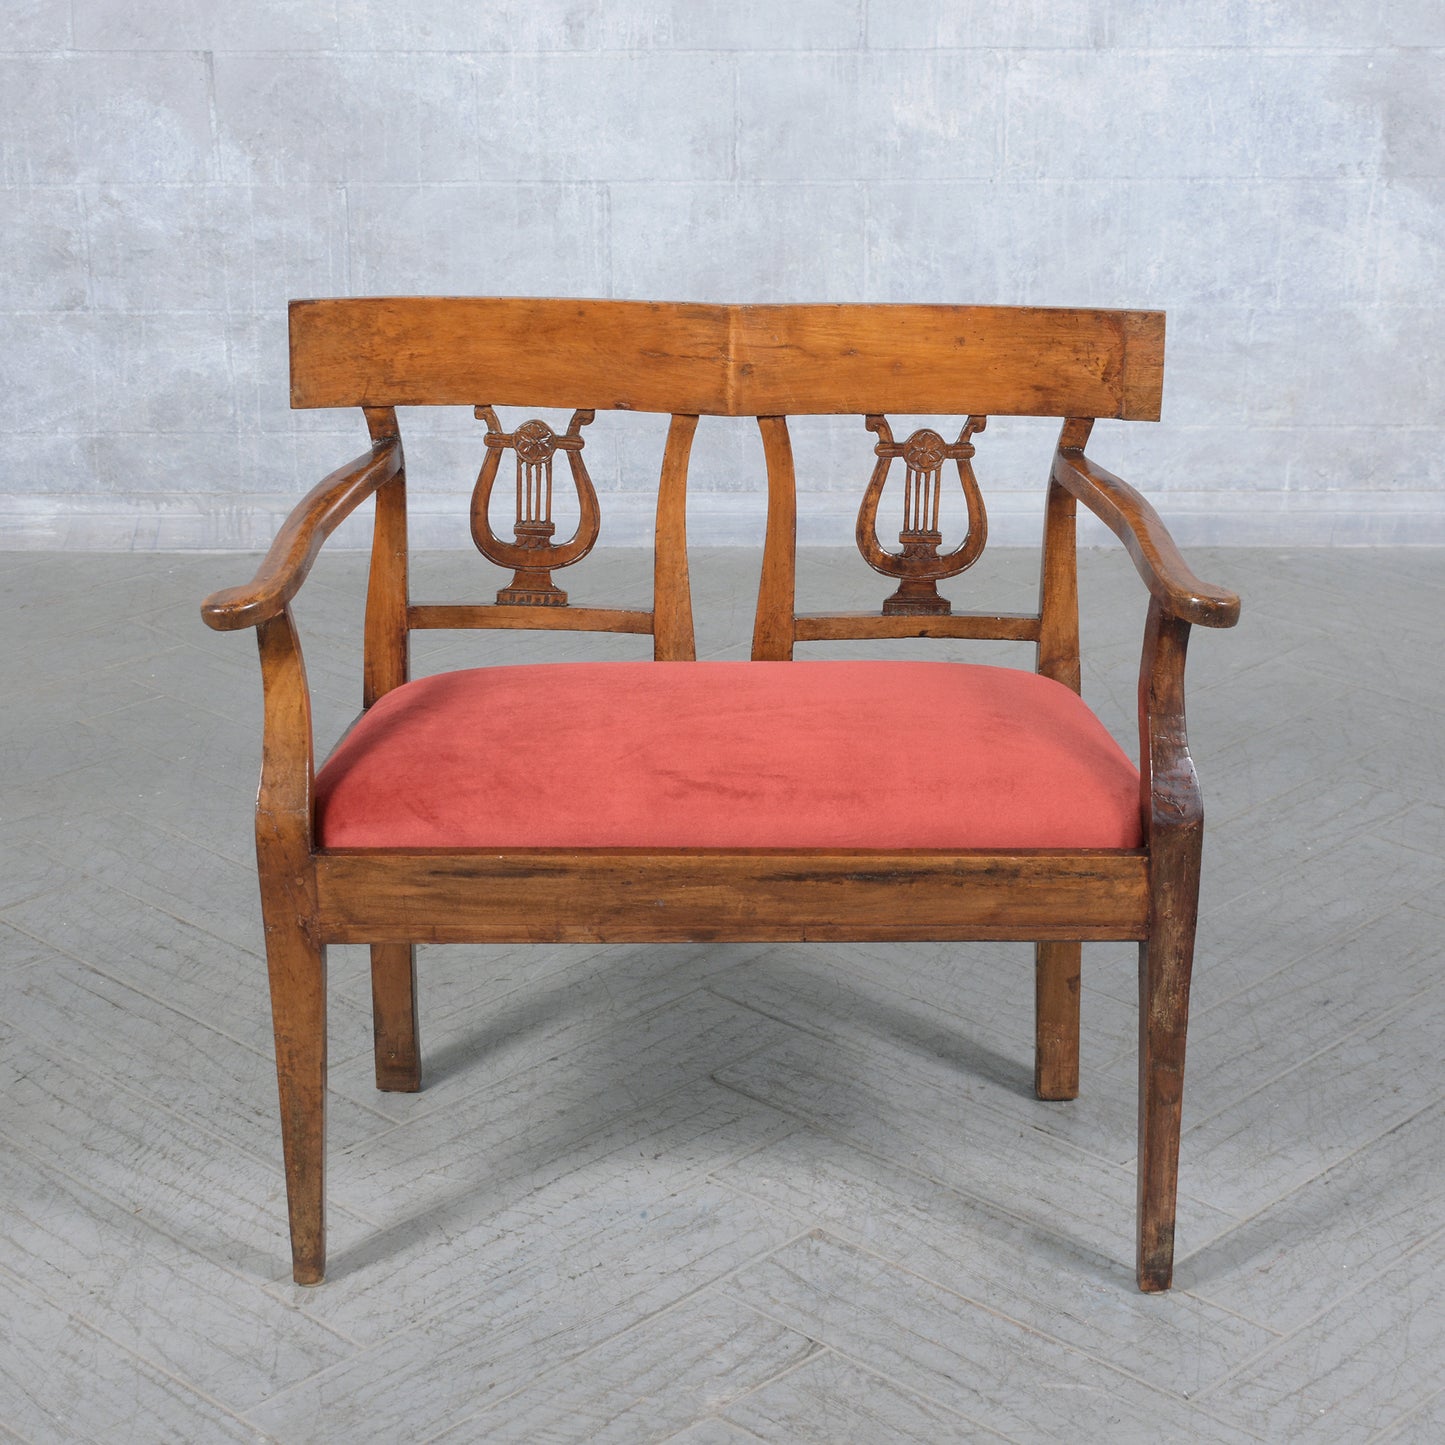 Late 18th-Century English Red Velvet Walnut Bench